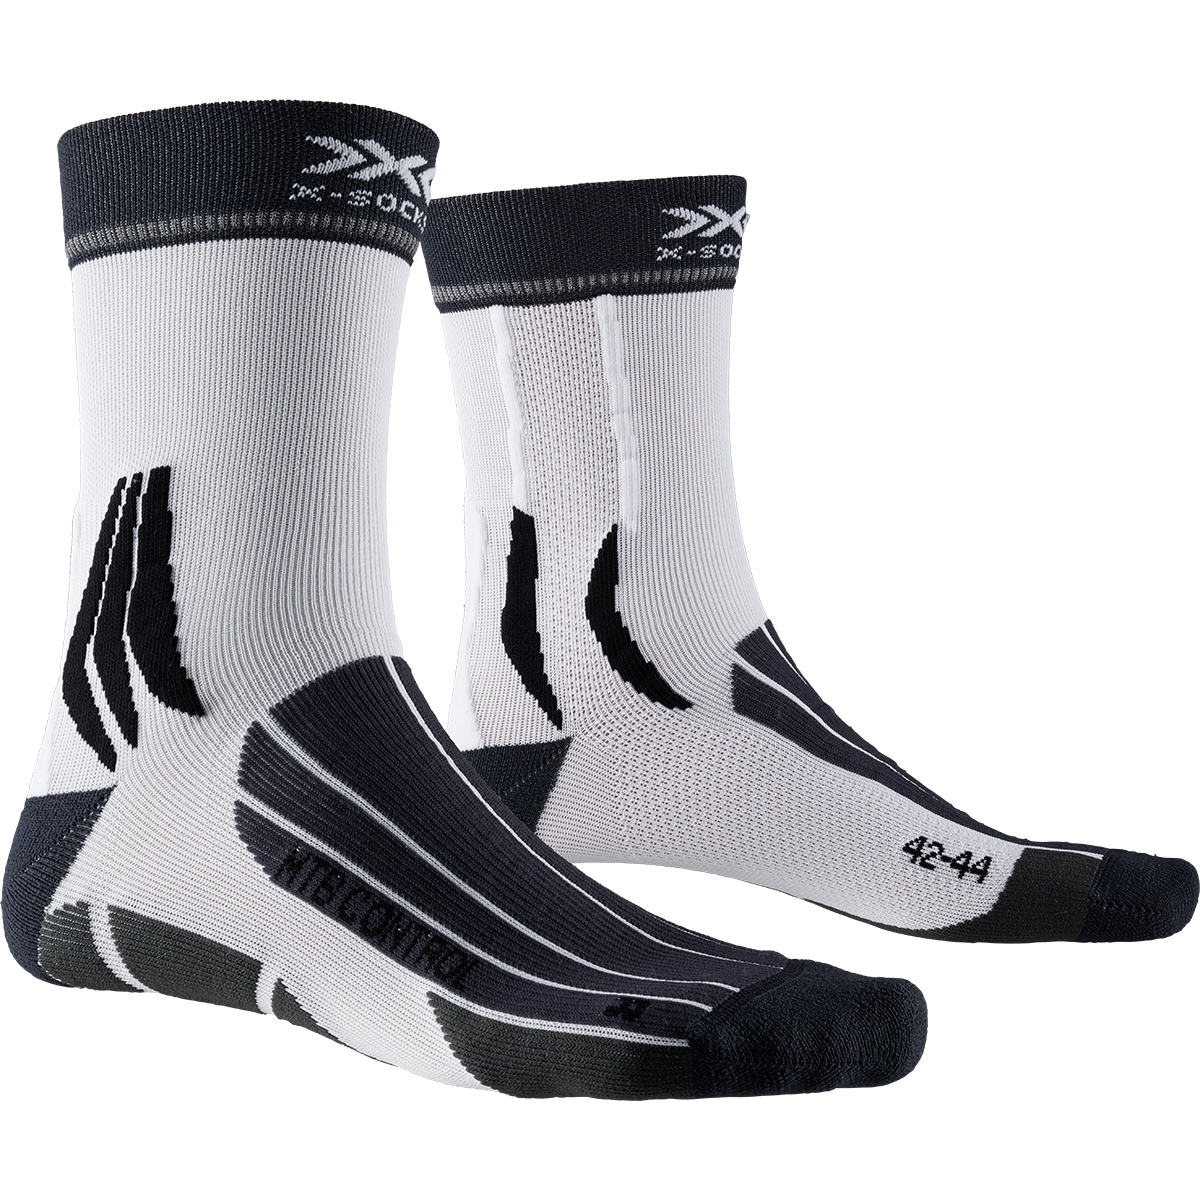 Picture of X-Socks MTB Control Socks - charcoal/arctic white